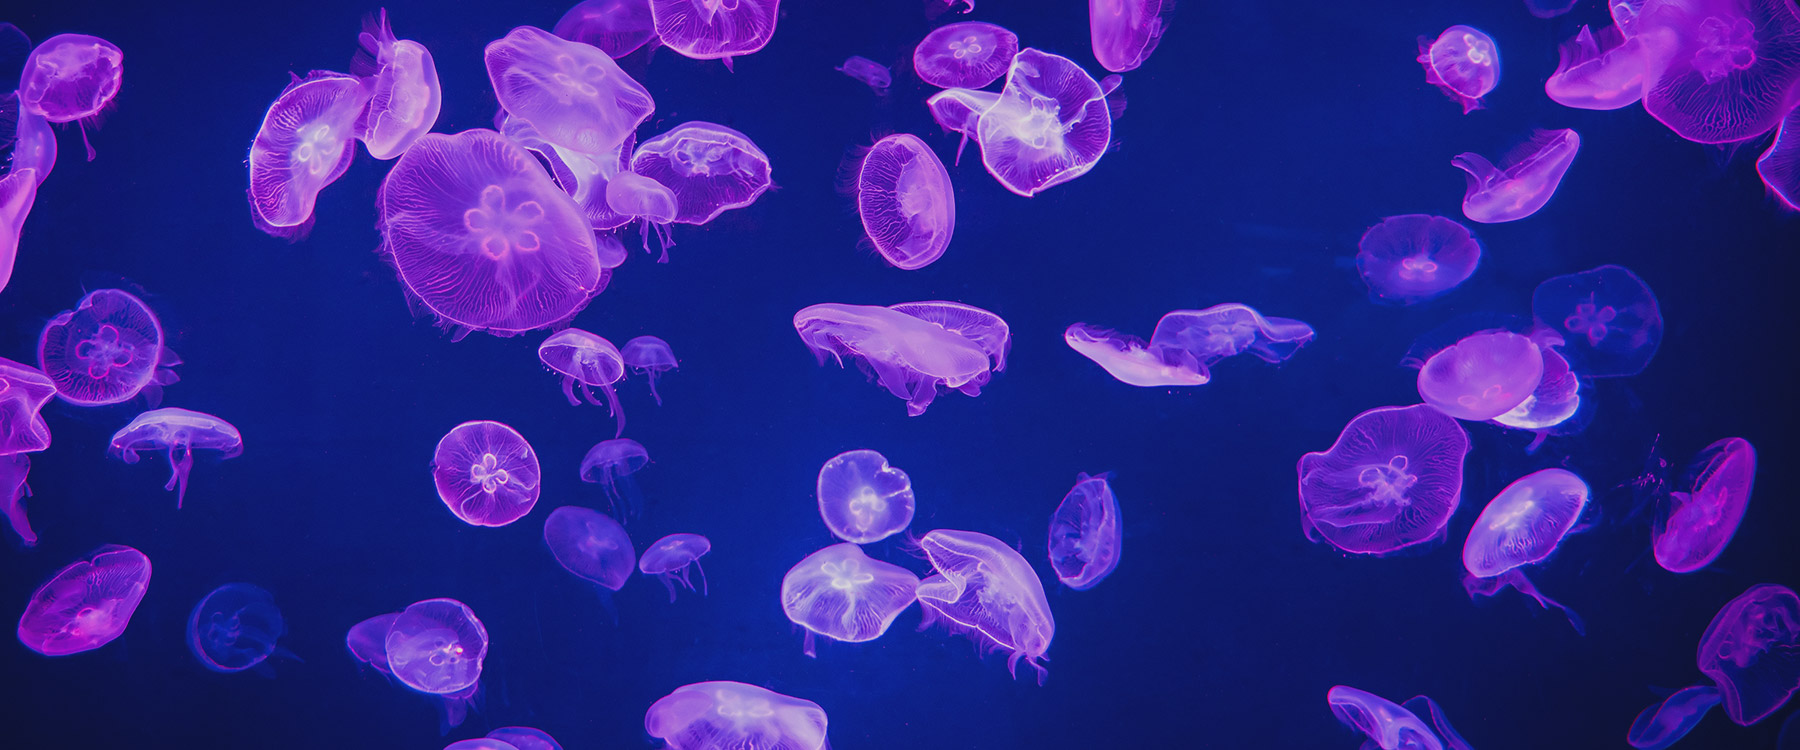 Underwater scene with jellyfish glowing purple